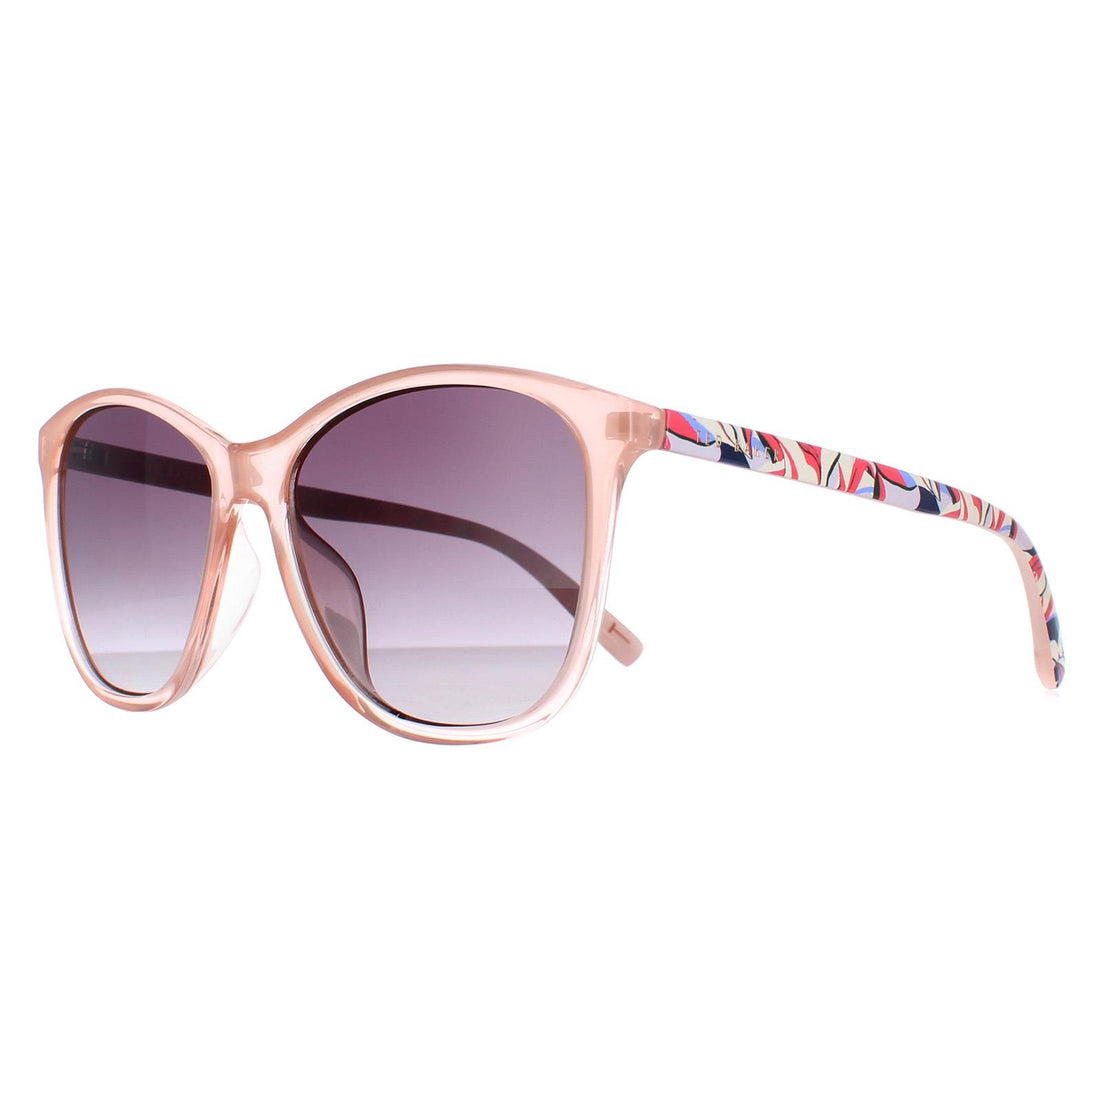 Ted Baker Sunglasses TB1646 Delfi 203 Transparent Pink Grey Gradient